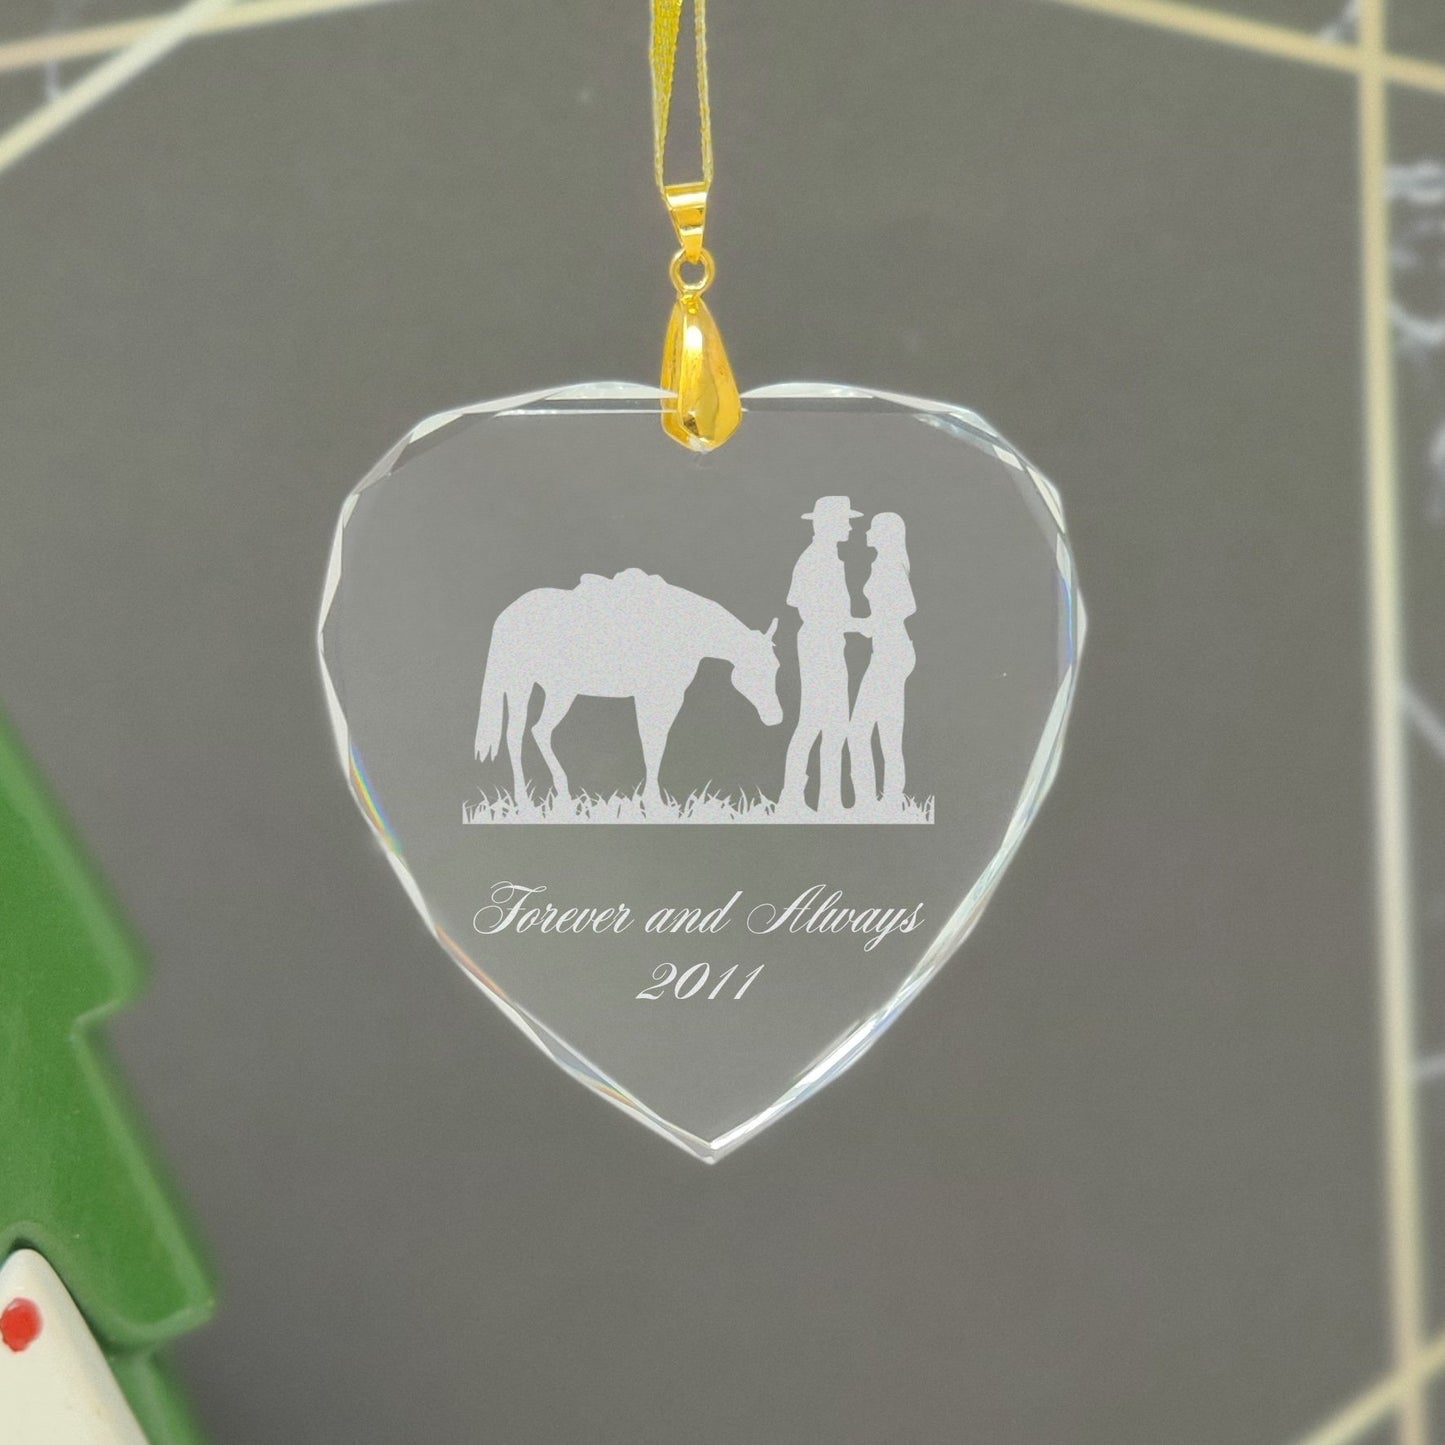 LaserGram Christmas Ornament, Zodiac Sign Aquarius, Personalized Engraving Included (Heart Shape)